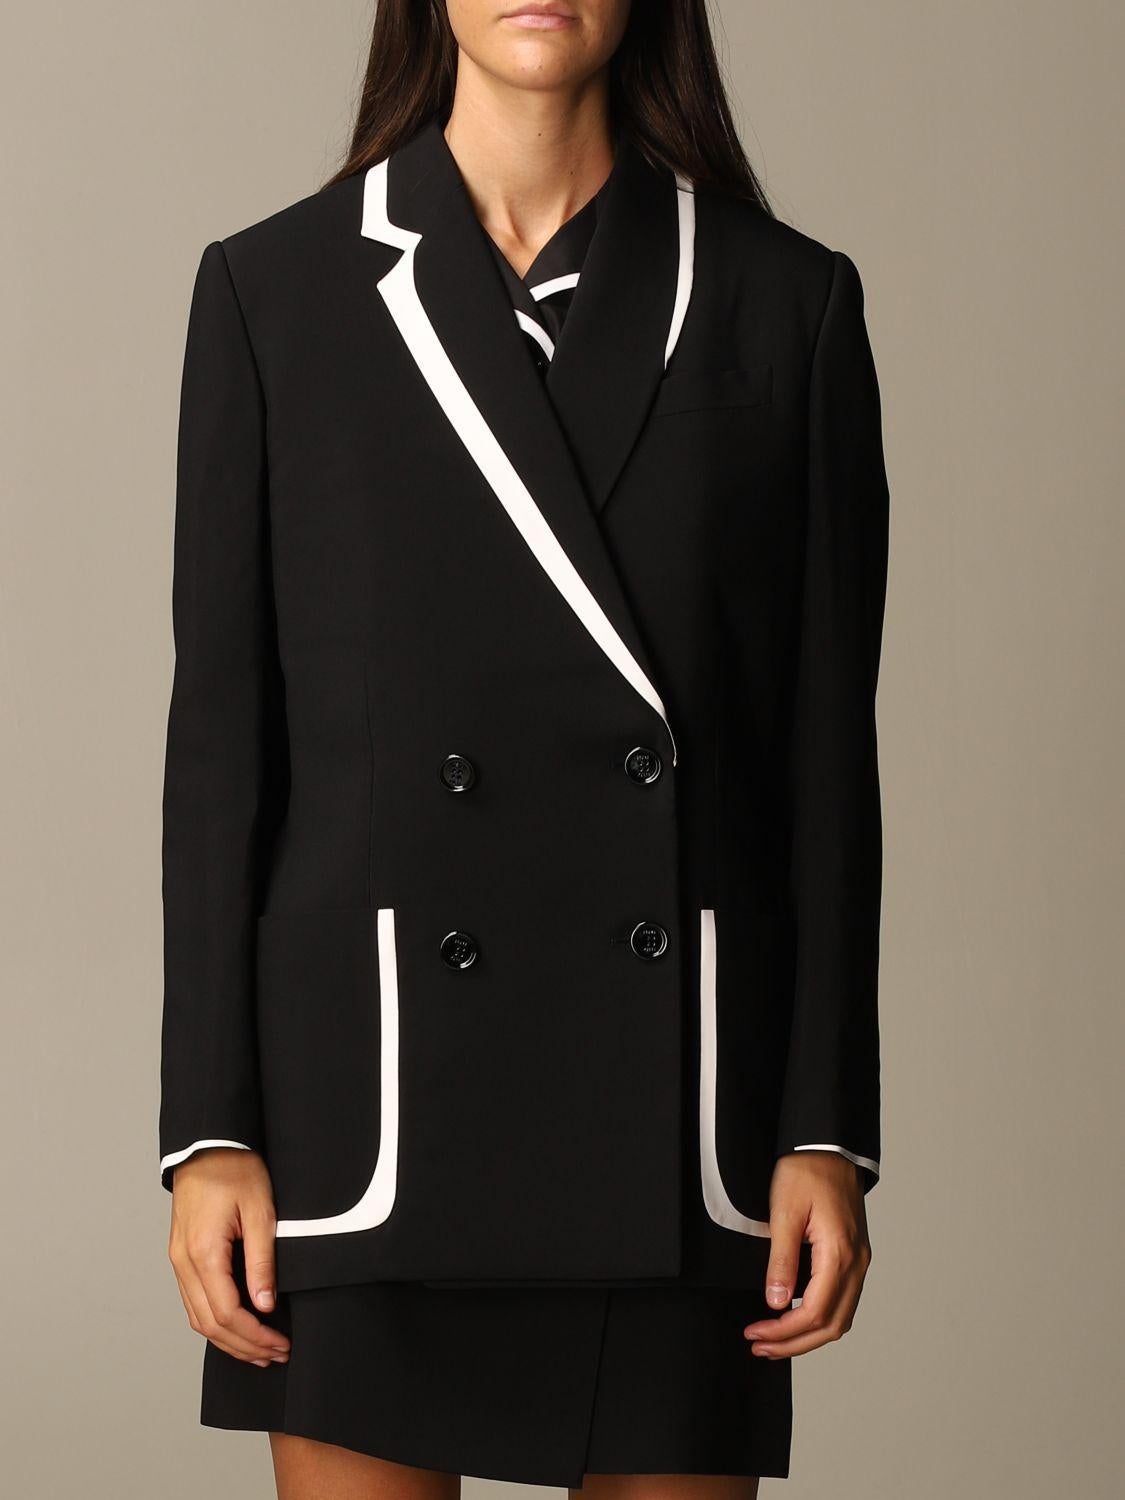 FENDI x JOSHUA VIDES black viscose 2020 CONTRAST TRIM Blazer Jacket 40 S For Sale 2